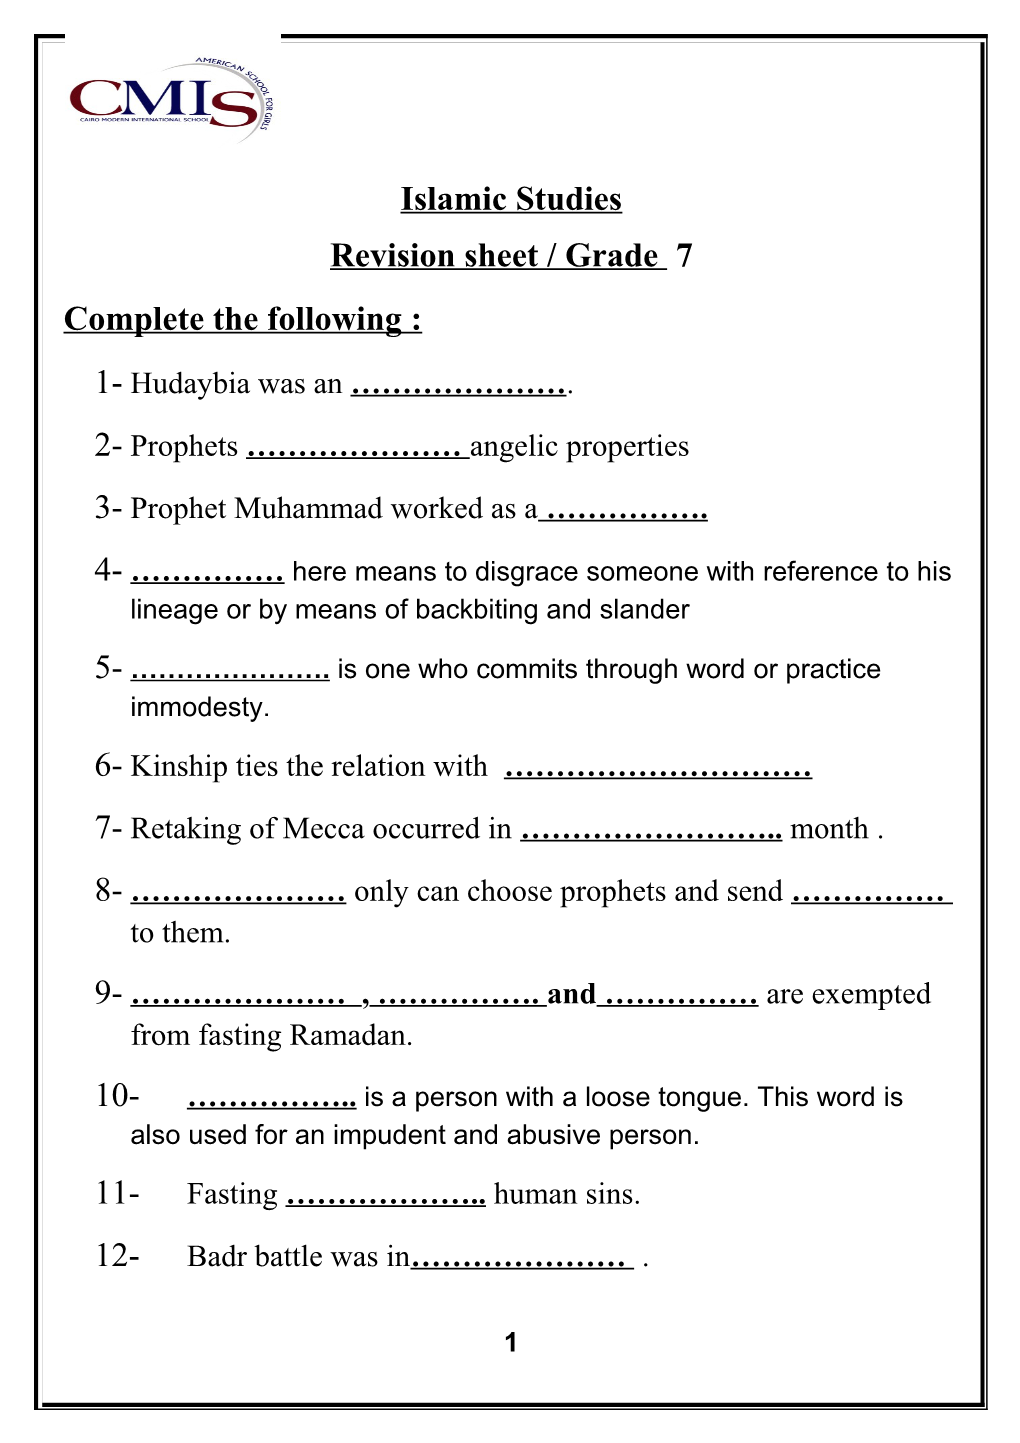 Revision Sheet / Grade 7